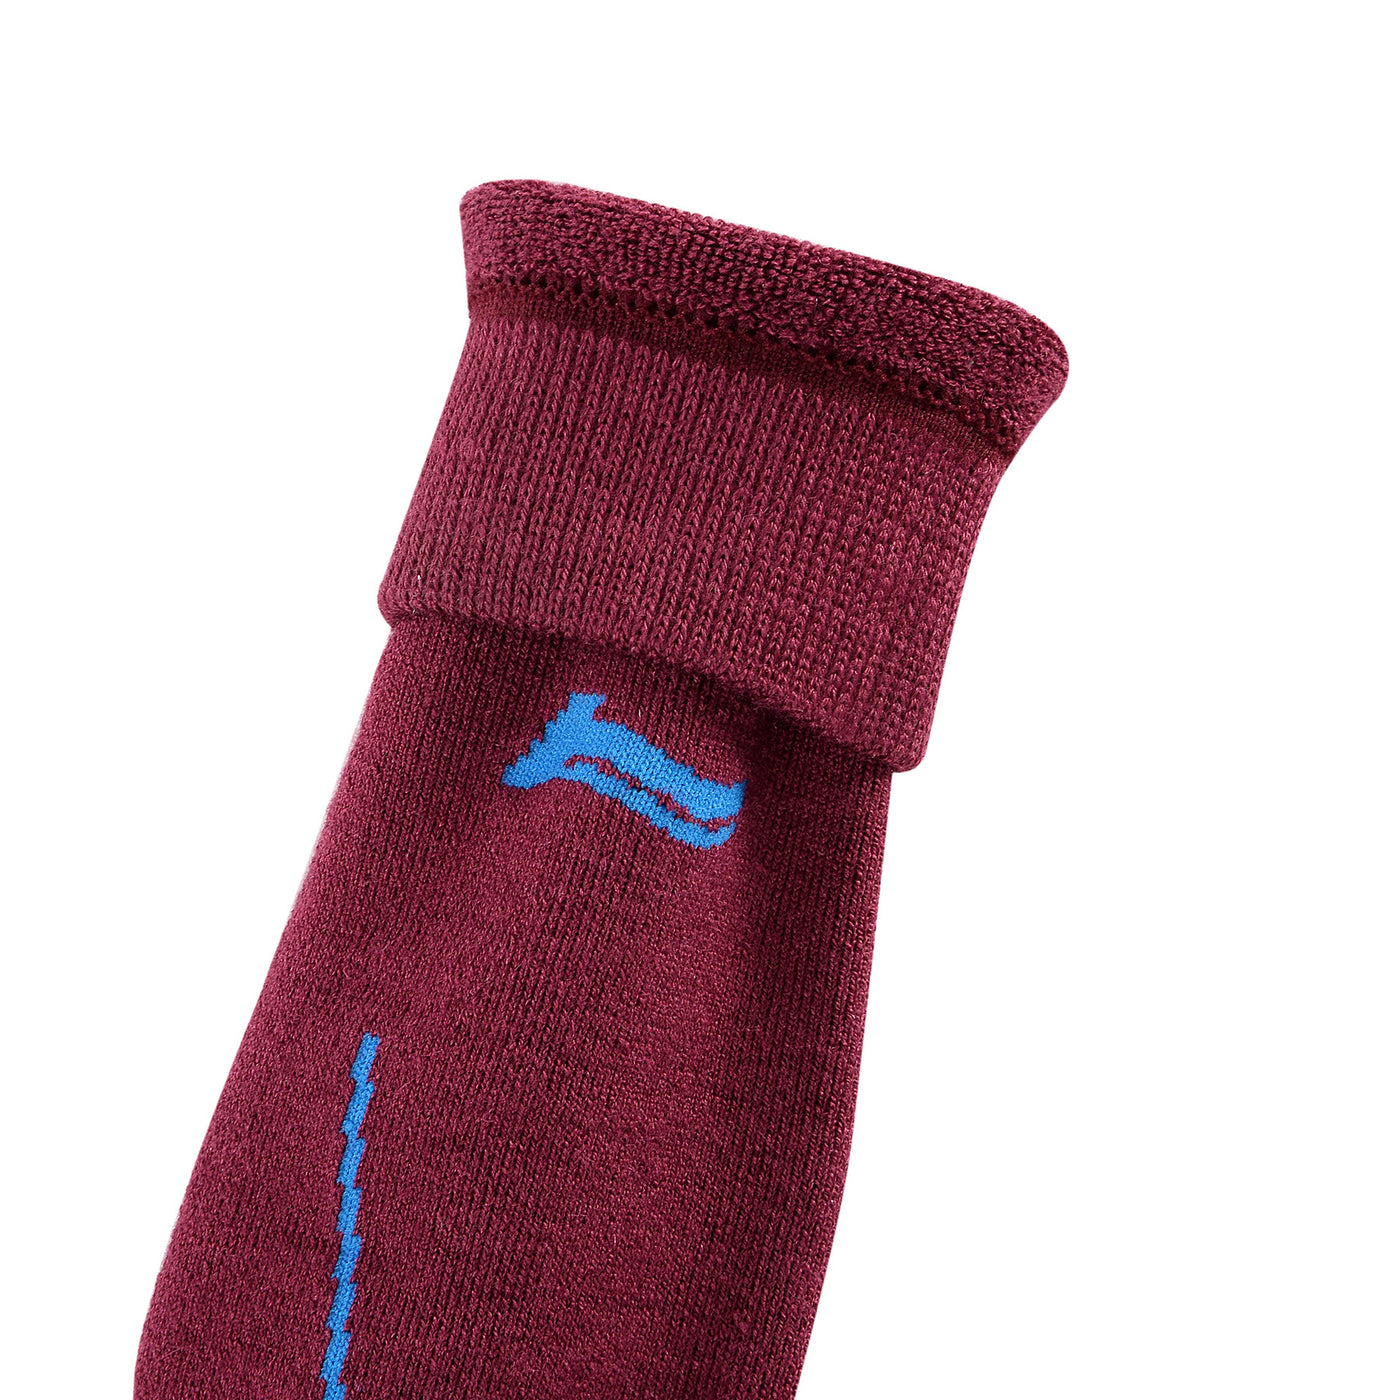 2 Pairs High Quality Merino Wool Men's Ski Socks, Gift Set